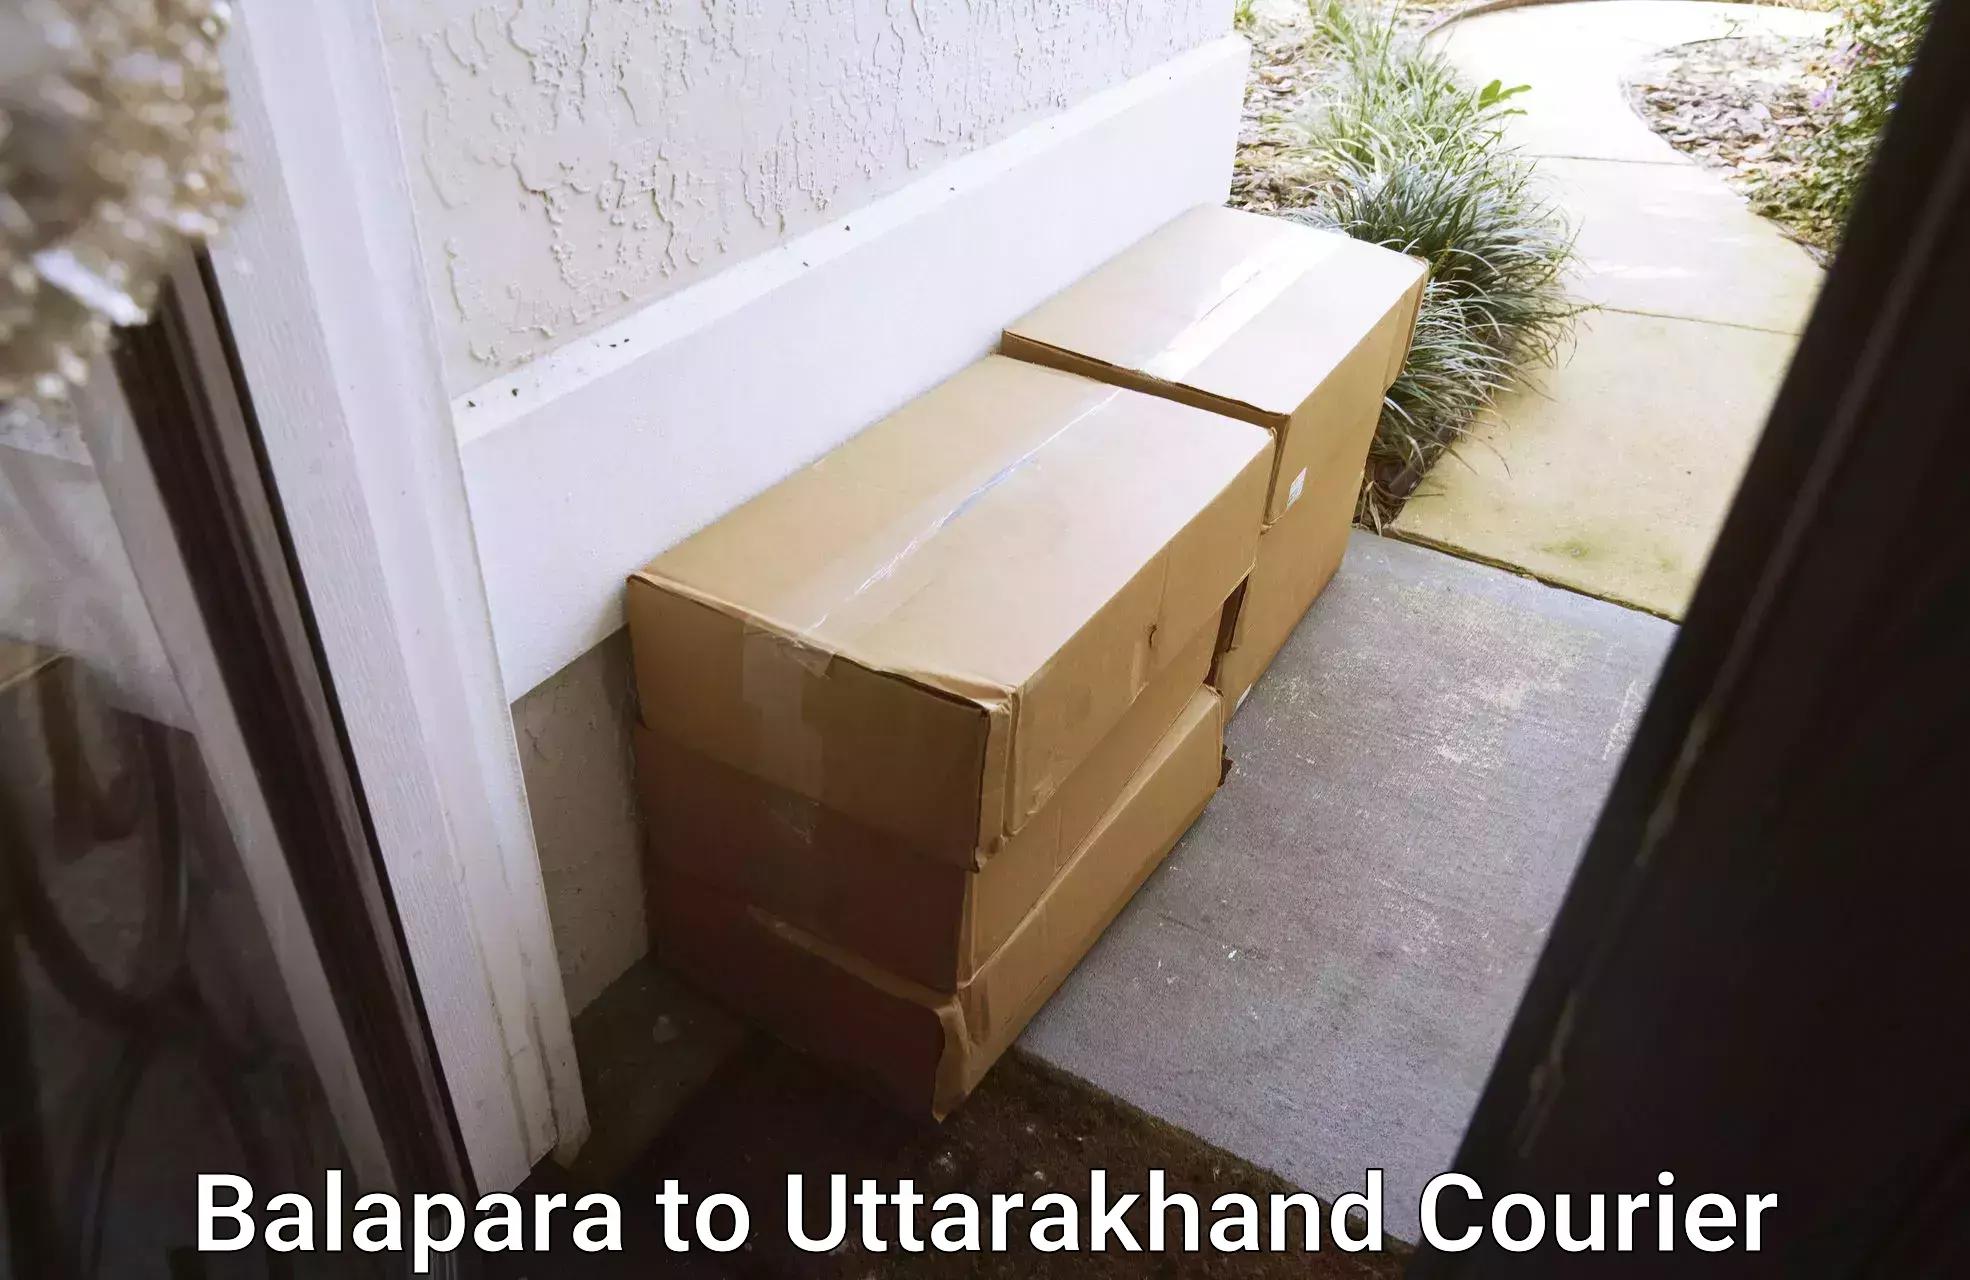 Same-day delivery solutions Balapara to Rudraprayag